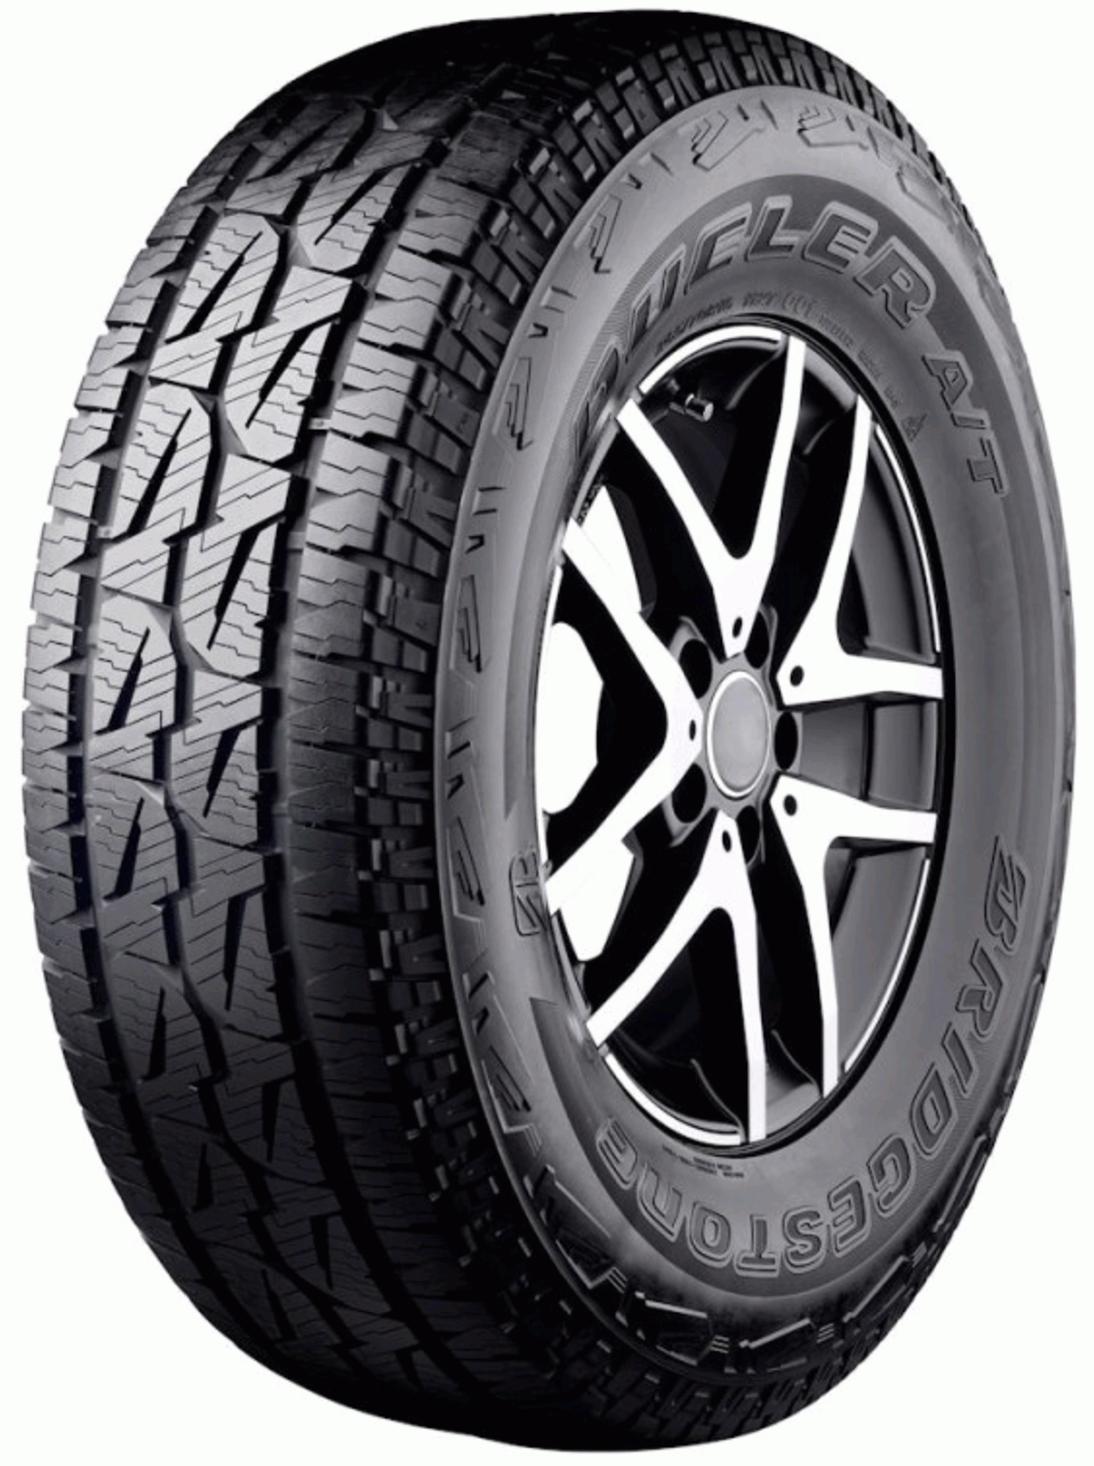 Tests Reviews 001 Dueler - Bridgestone and Tire AT